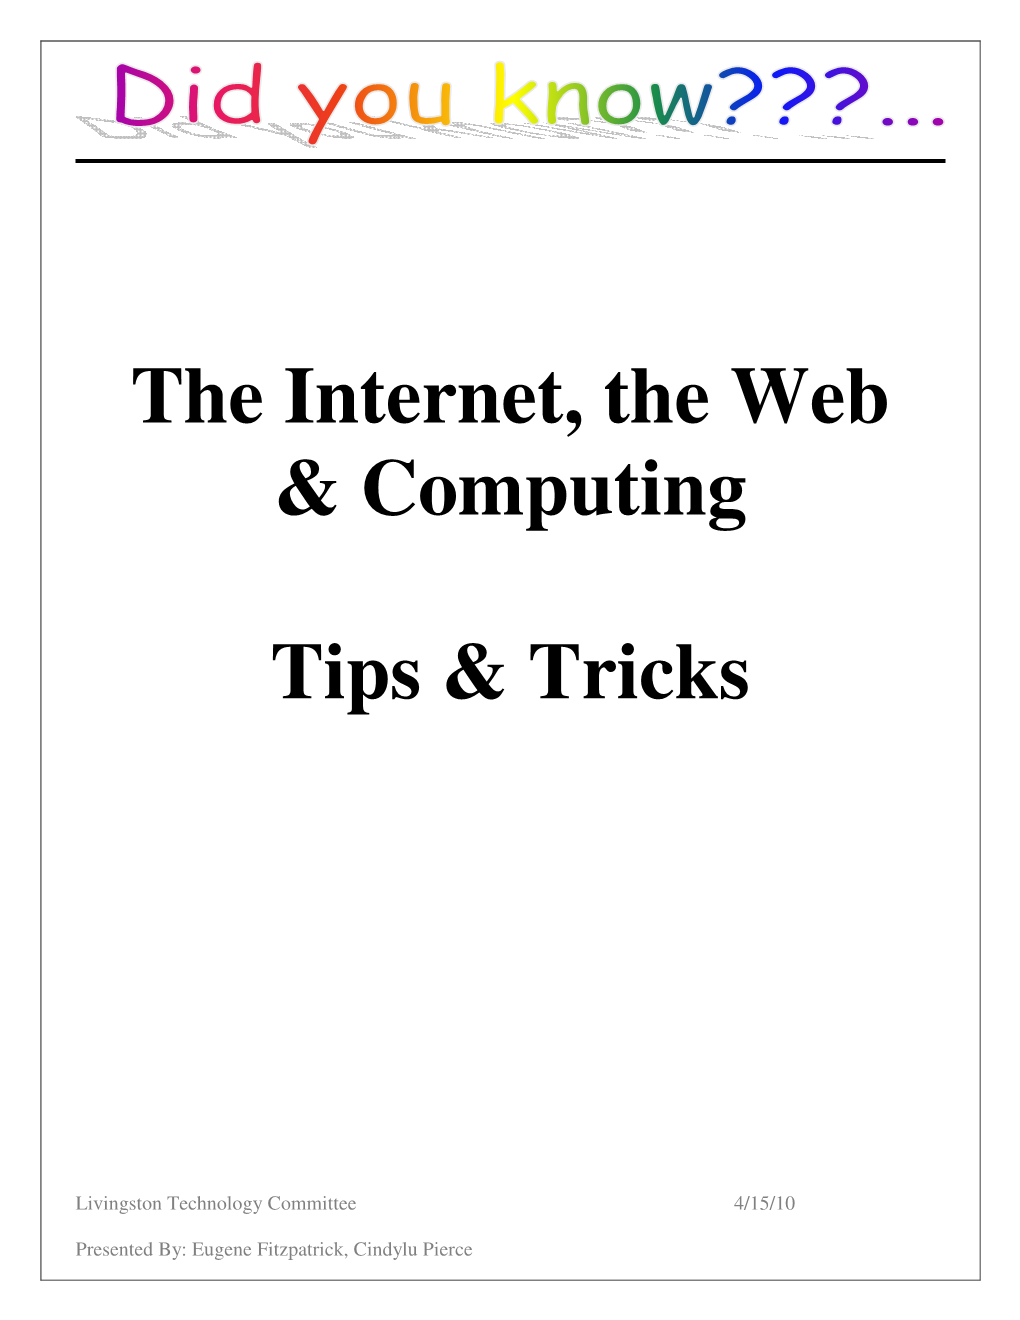 The Internet, the Web & Computing Tips & Tricks